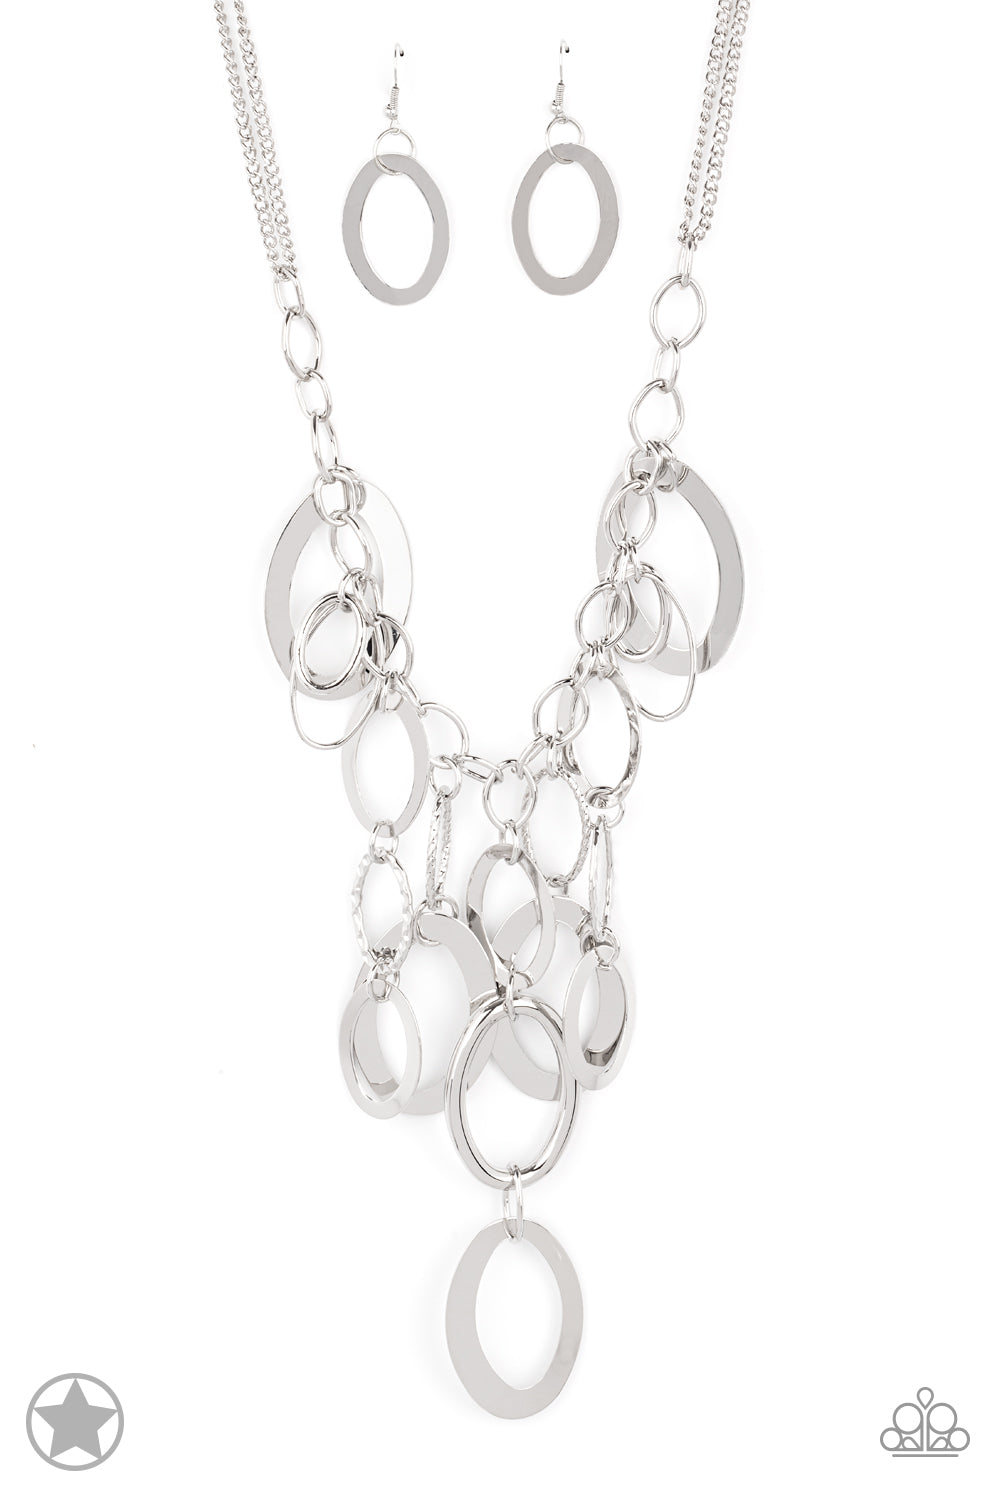 A Silver Spell - Silver Textured Medium-Length Necklace